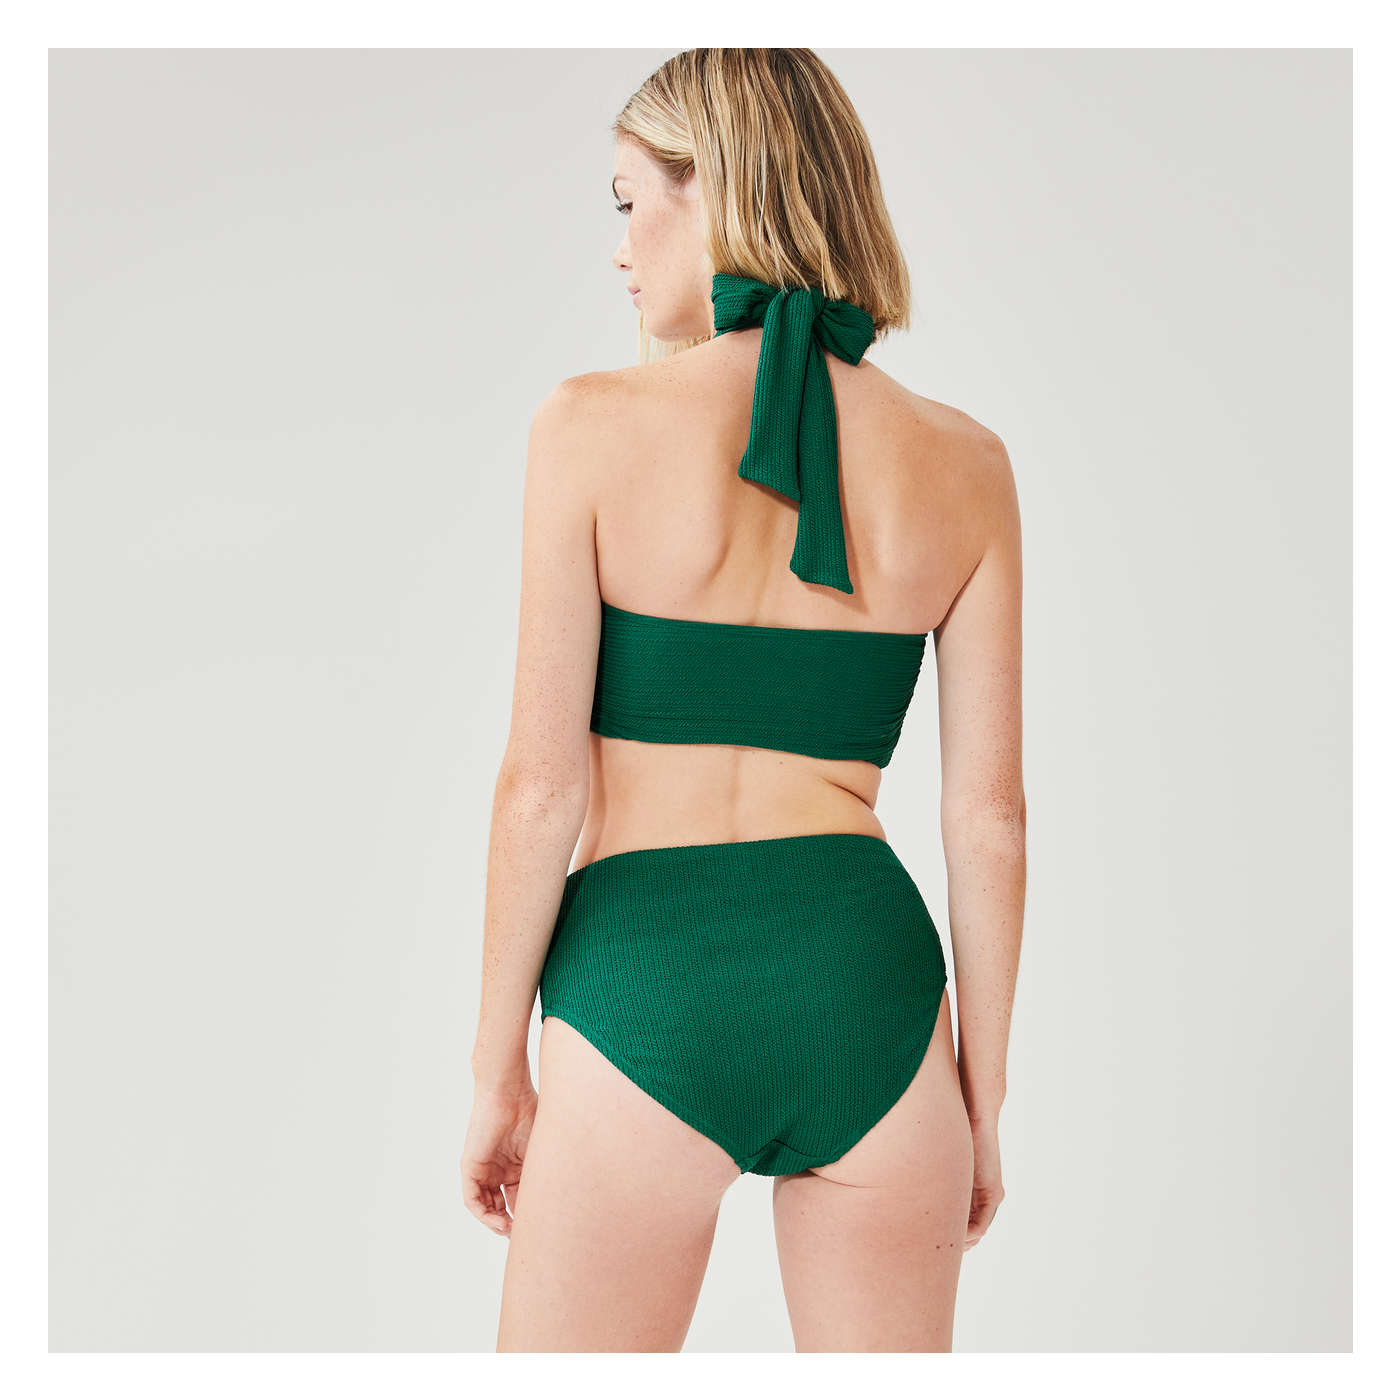 Bandeau Bikini Top in Dark Green from Joe Fresh